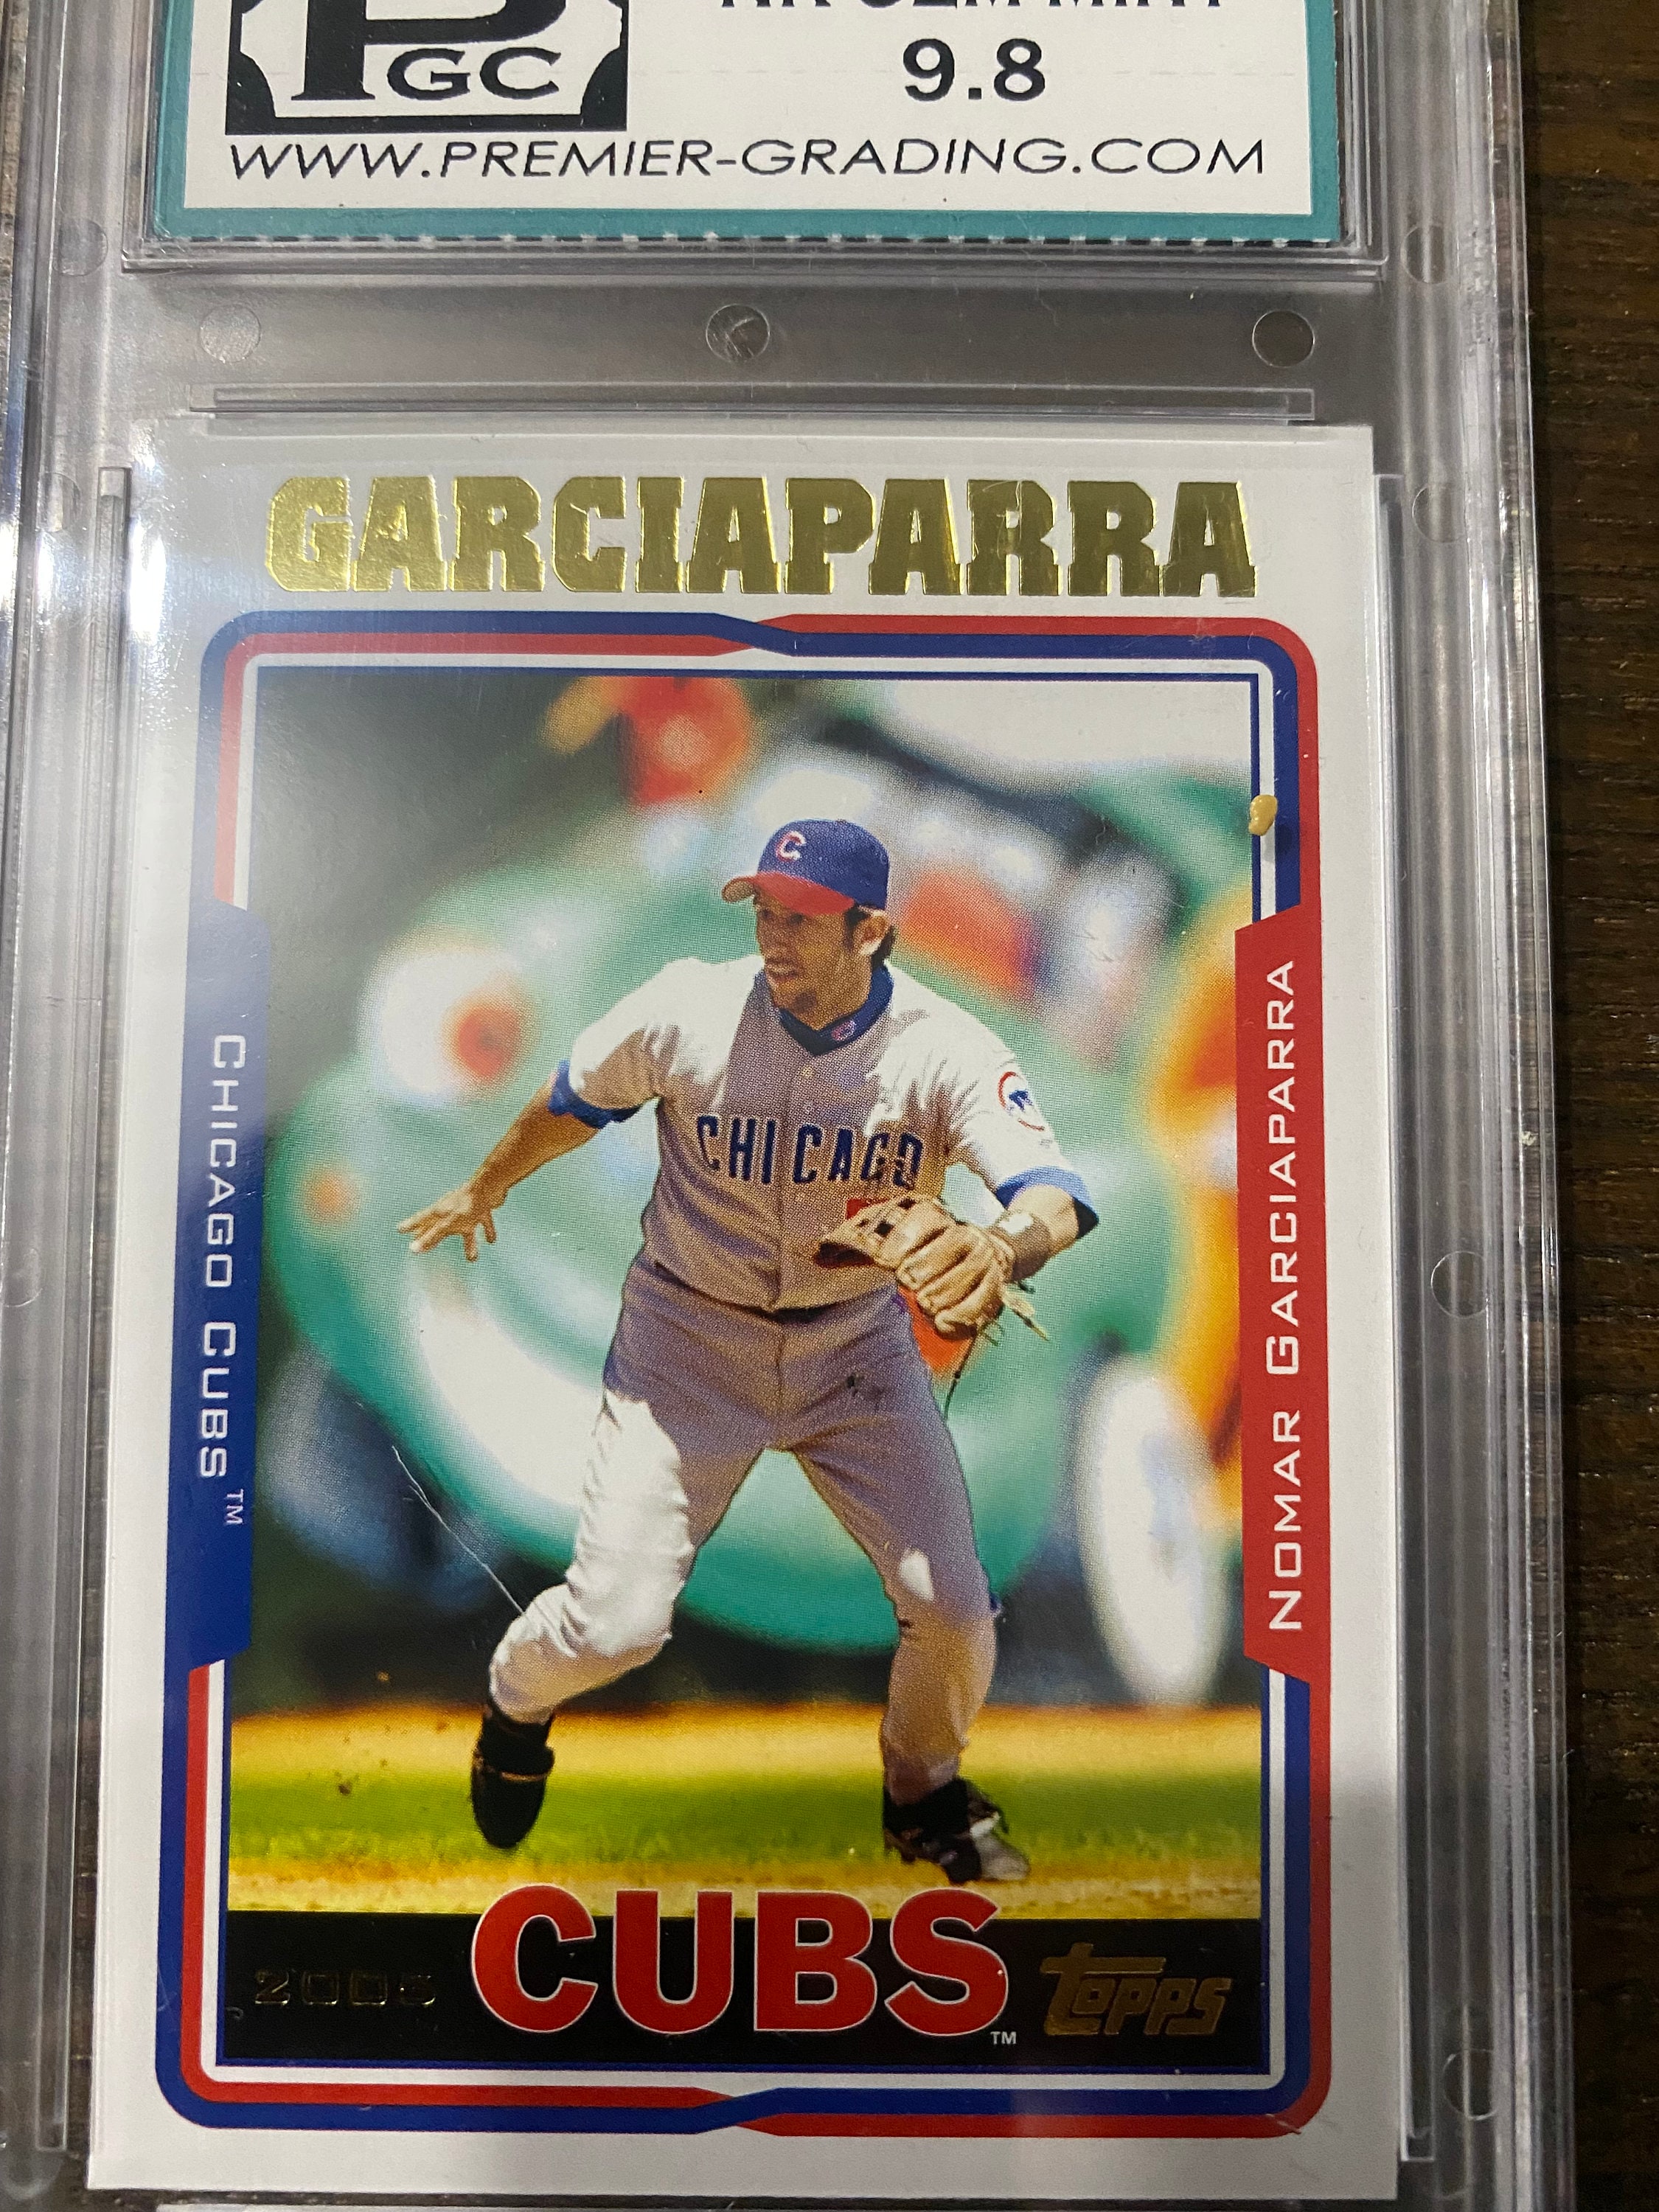 Nomar Garciaparra 2005 TOPPS Card Graded 9.8 Baseball 